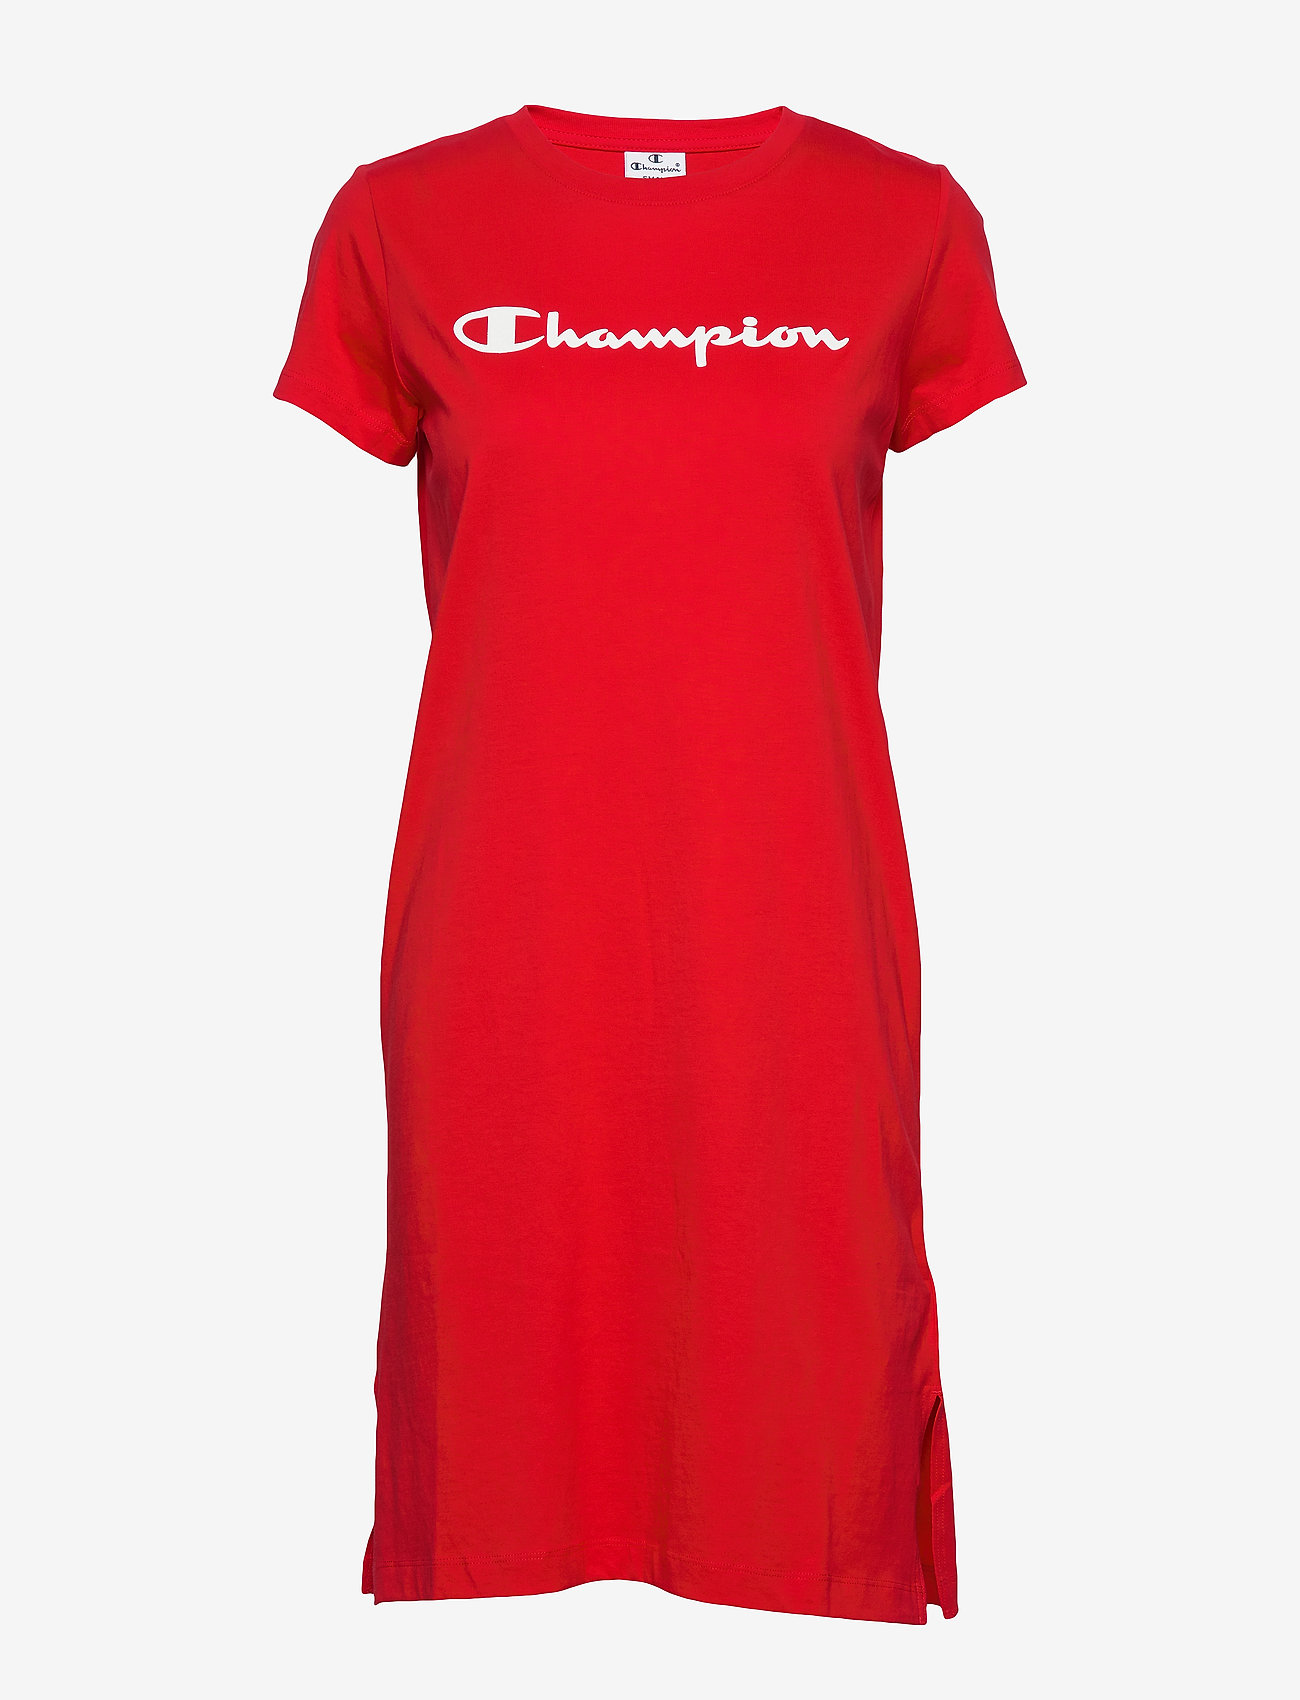 red champion dress